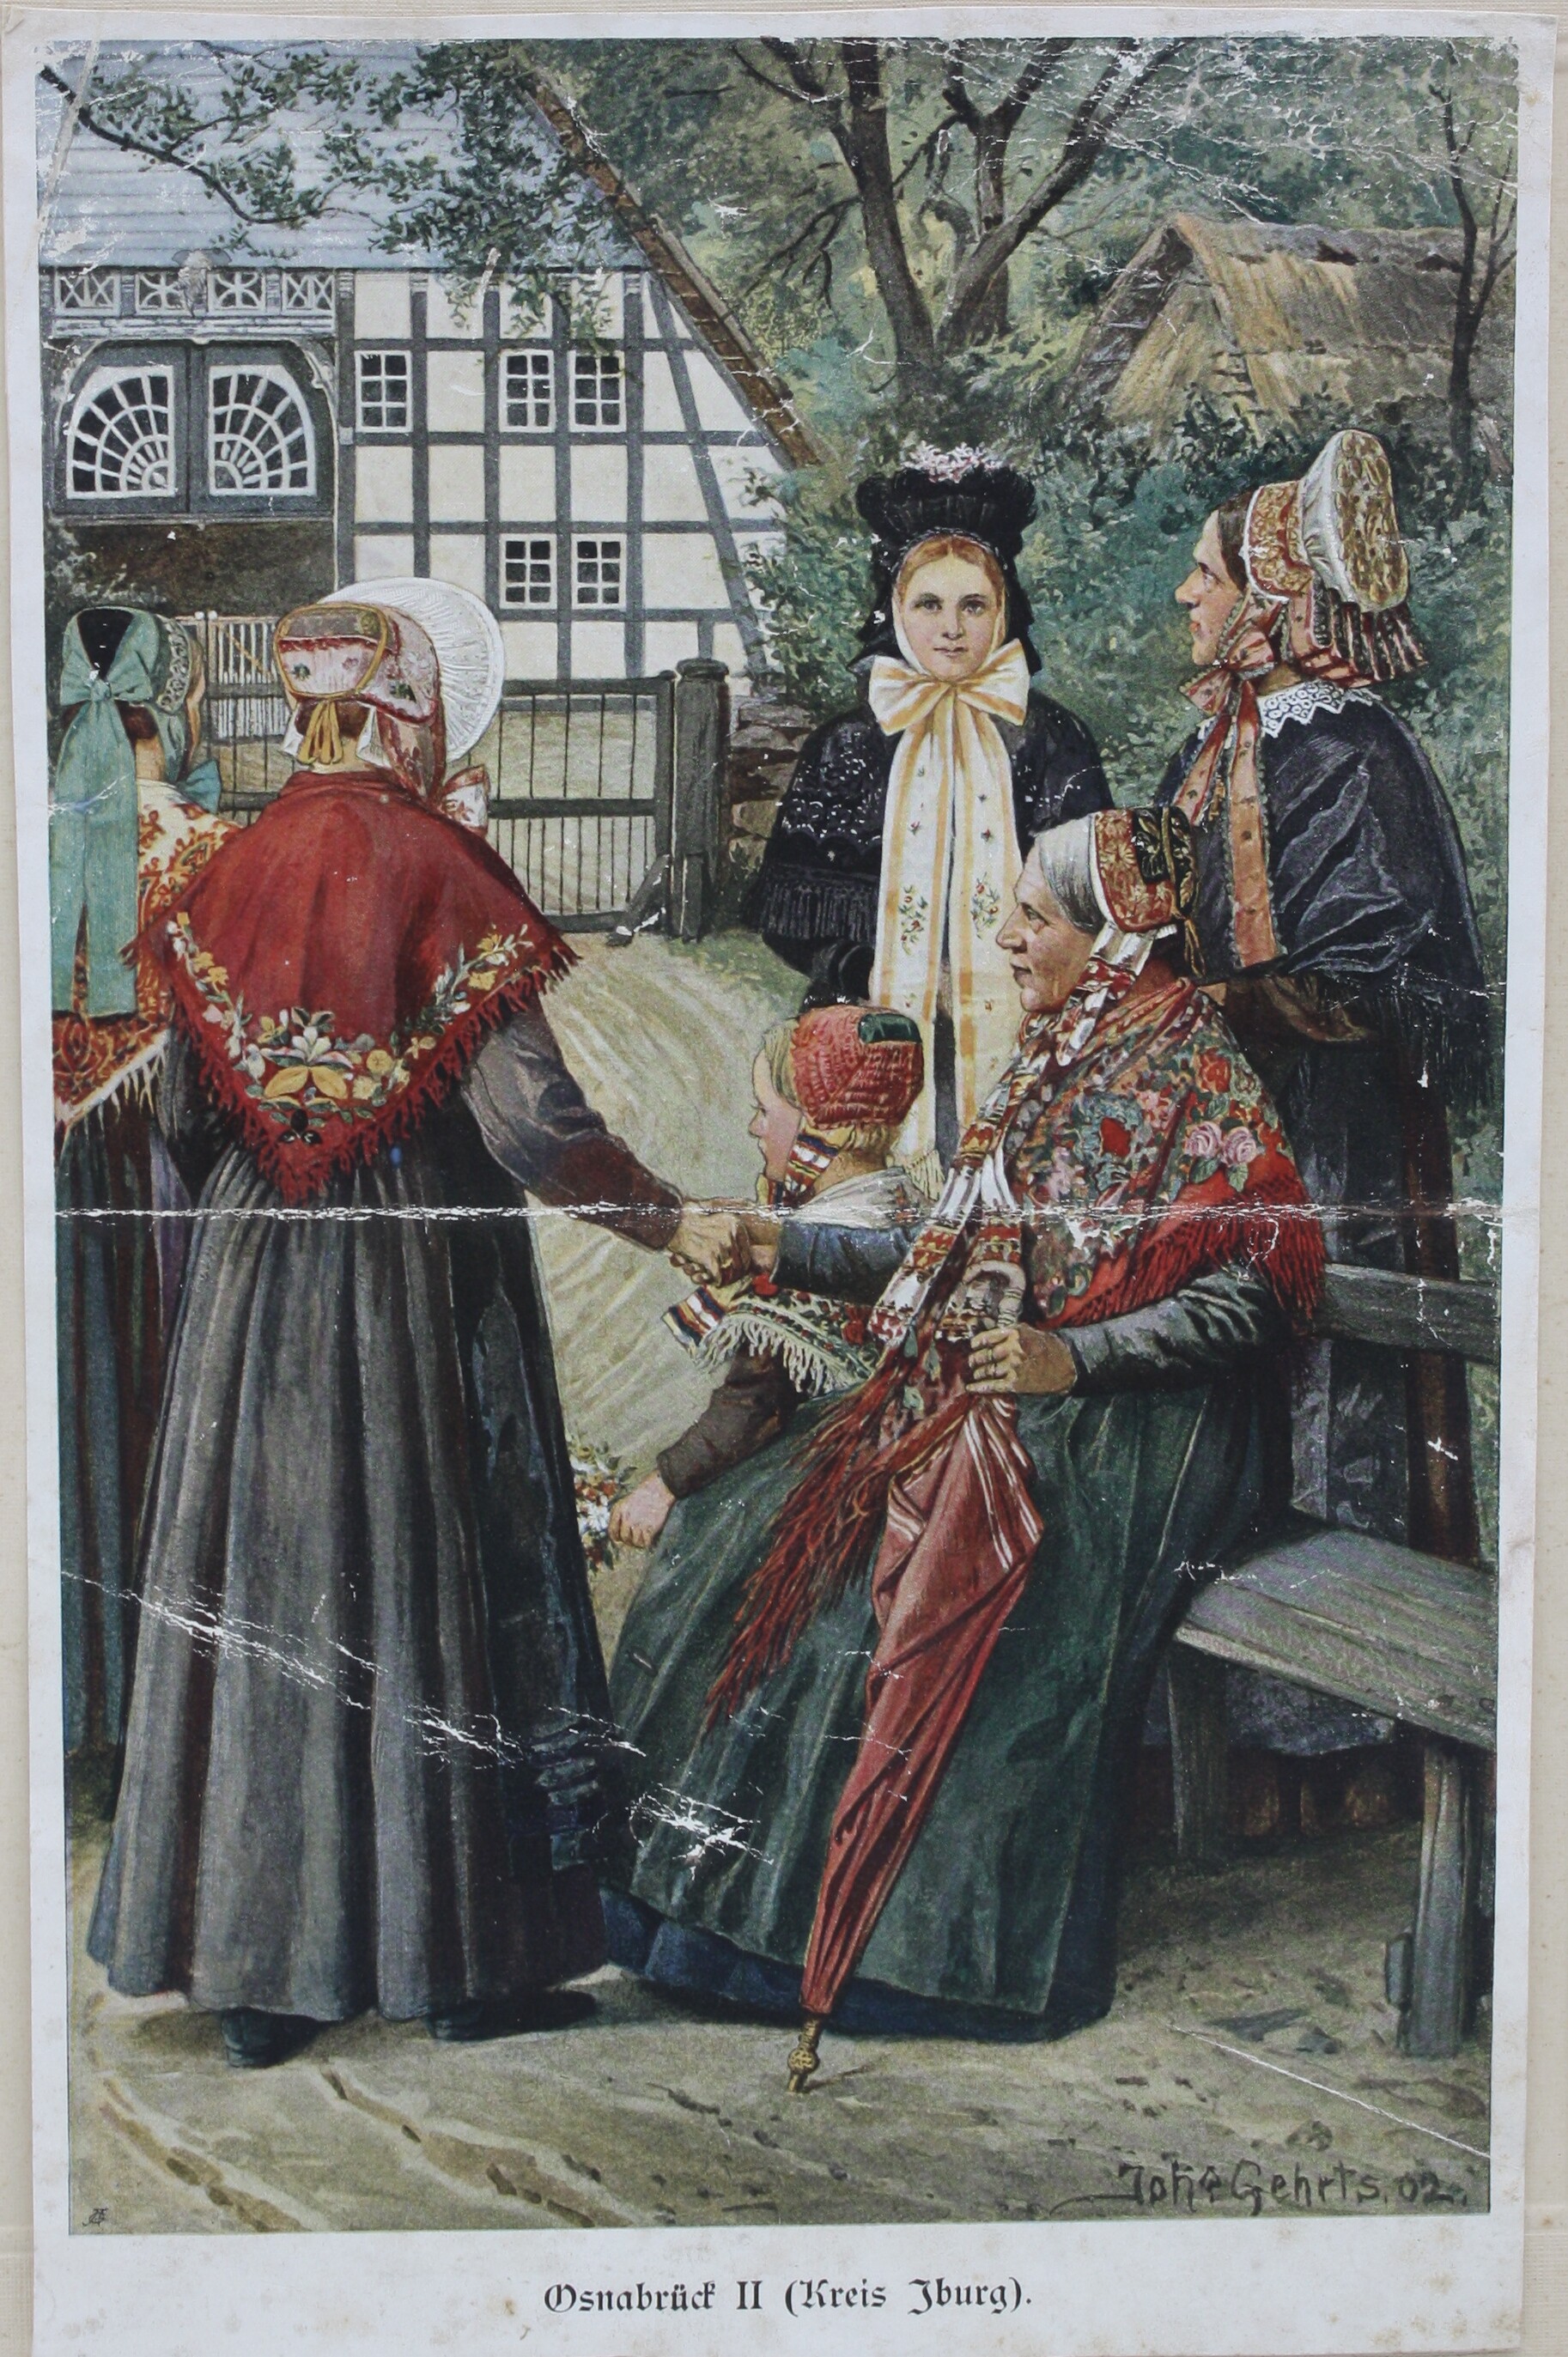 Kunstdruck: Trachten aus Osnabrück (Drilandmuseum CC BY-NC-SA)